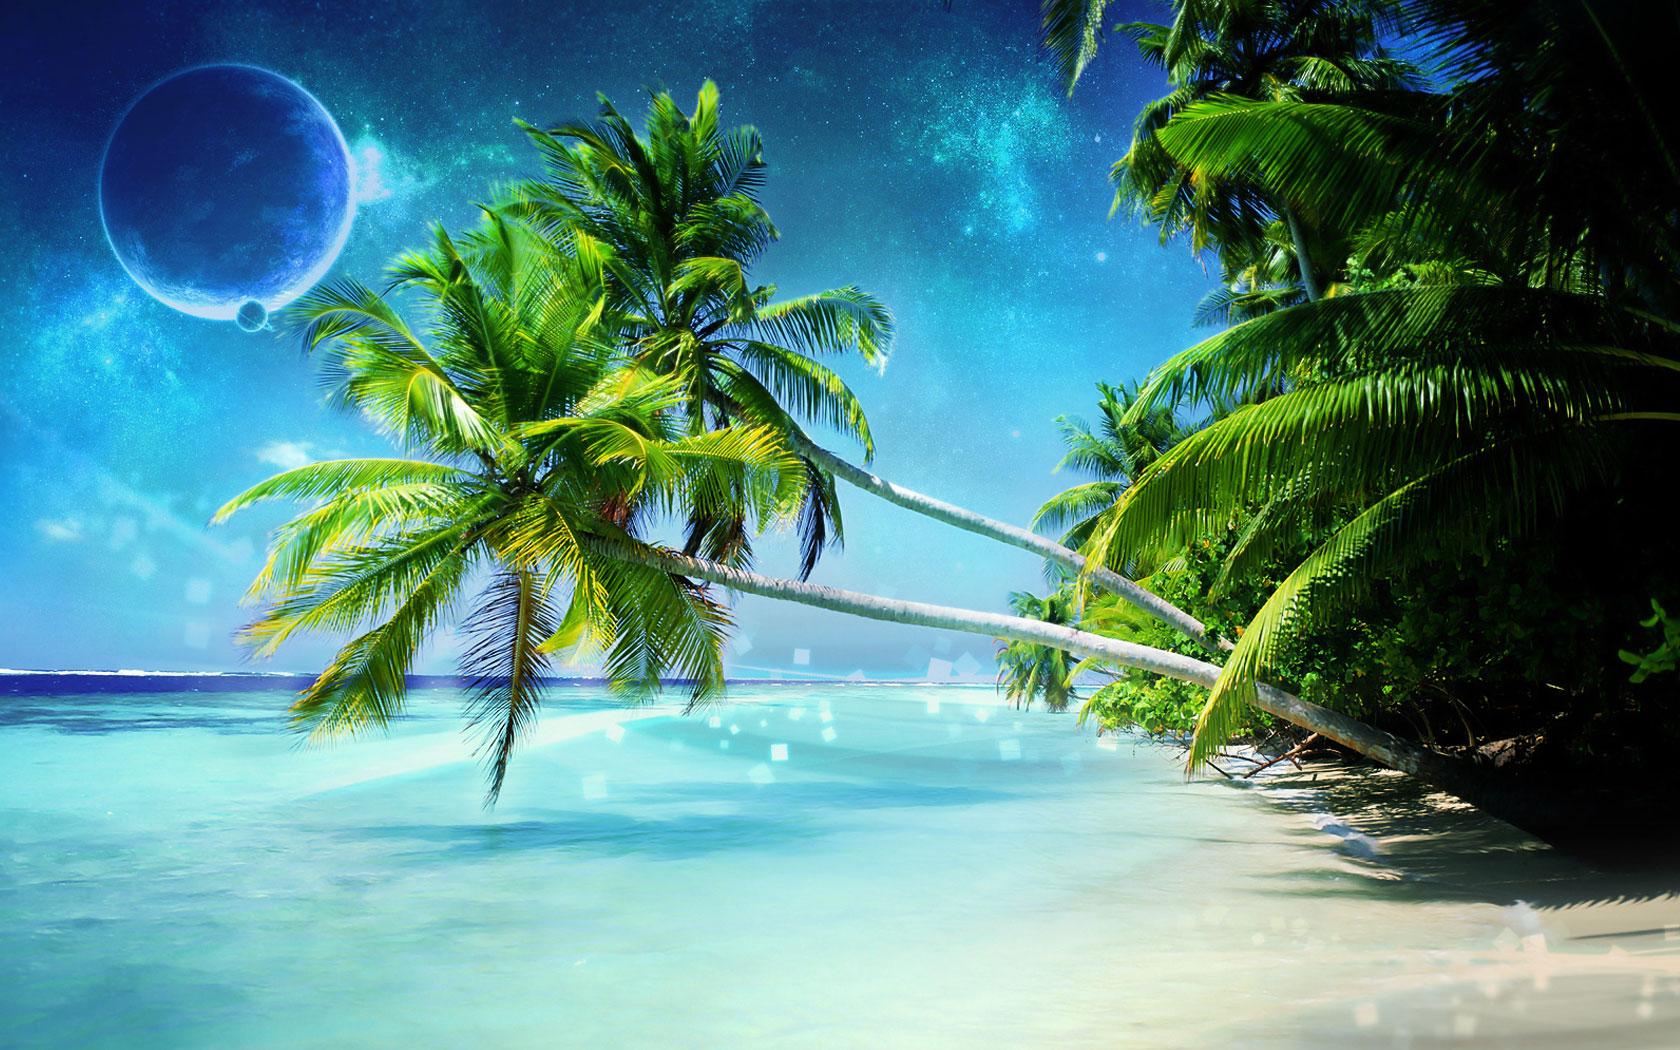 Fantasy Beach 3D Cool Wallpaper For Desktop. Wallpaper Background HD